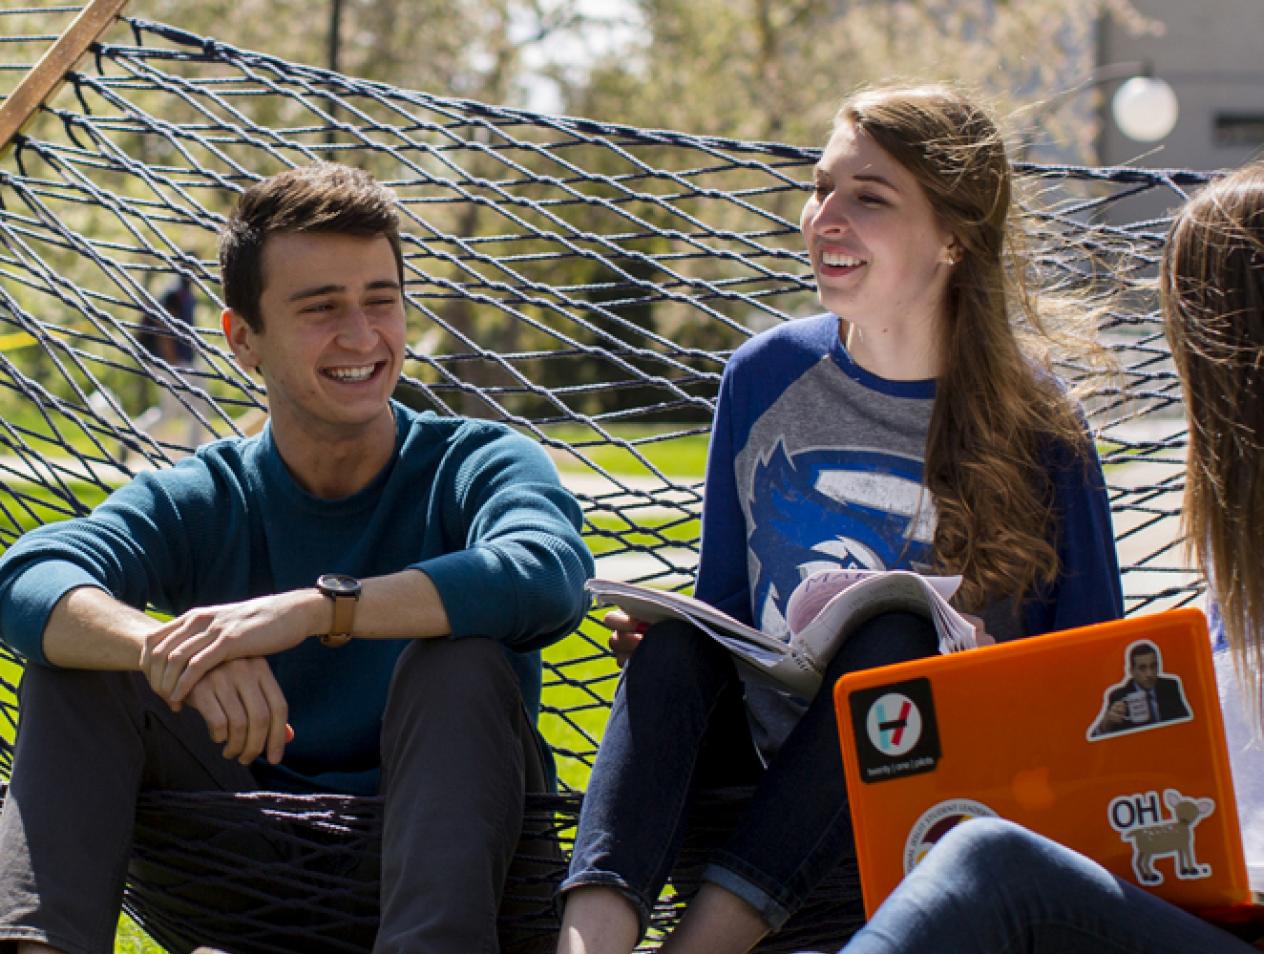 Students socializing in hammocks on Creighton campus